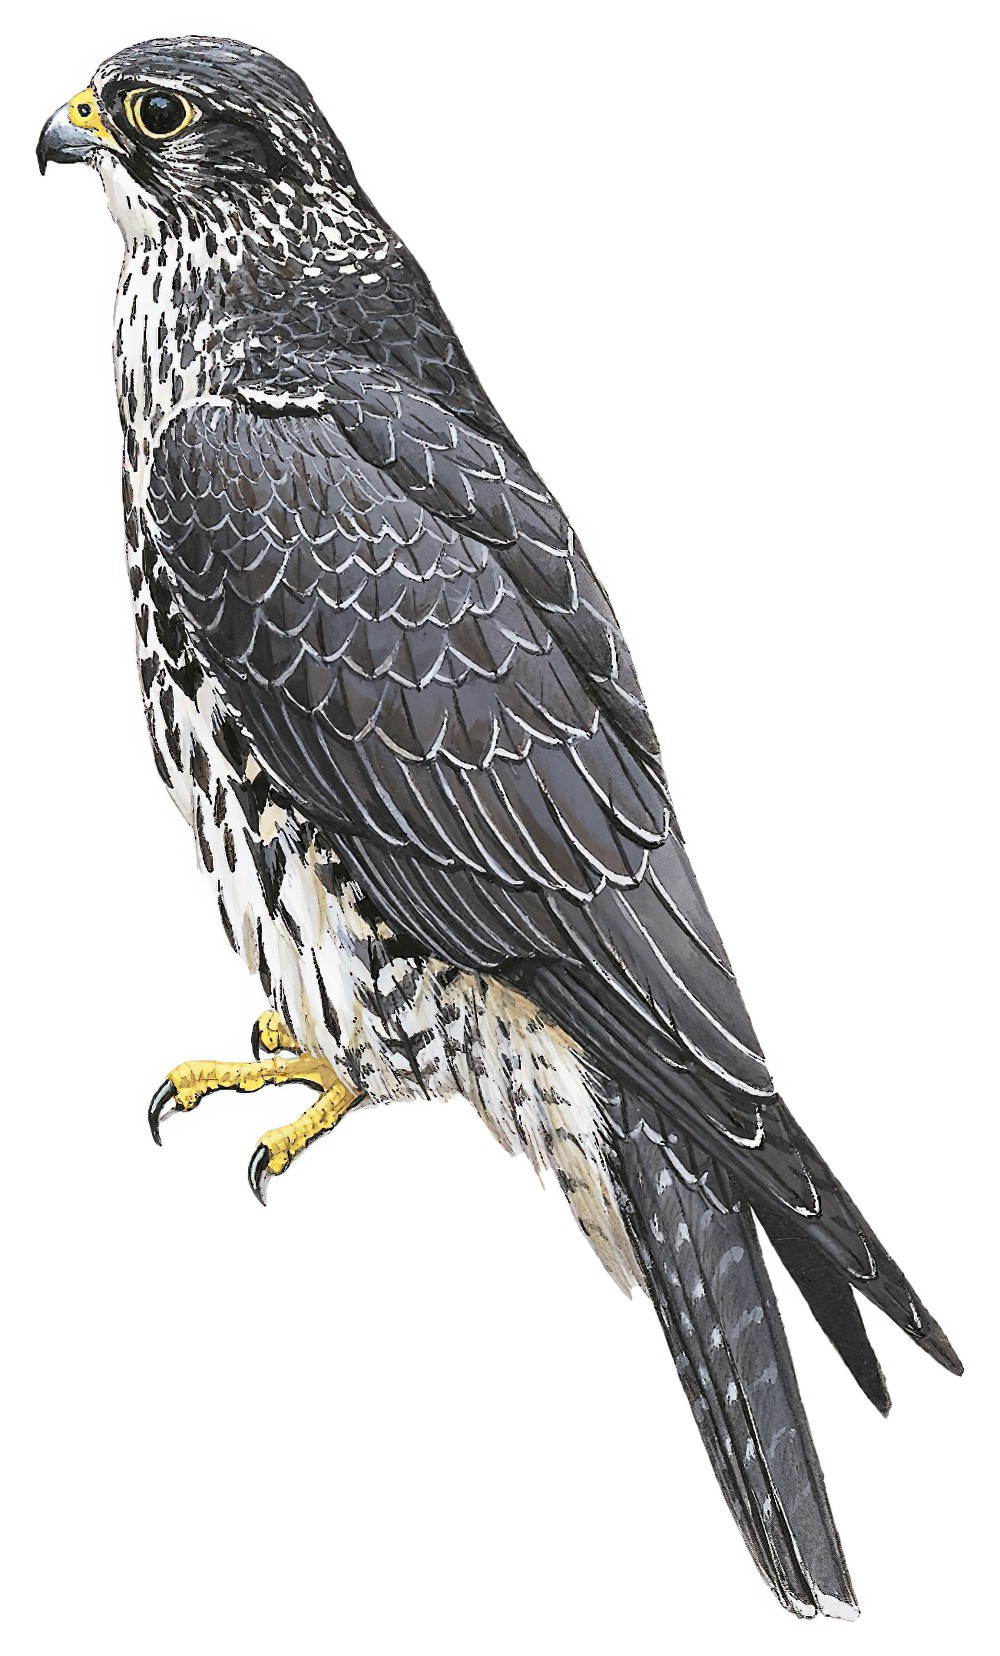 Gyrfalcon / Falco rusticolus